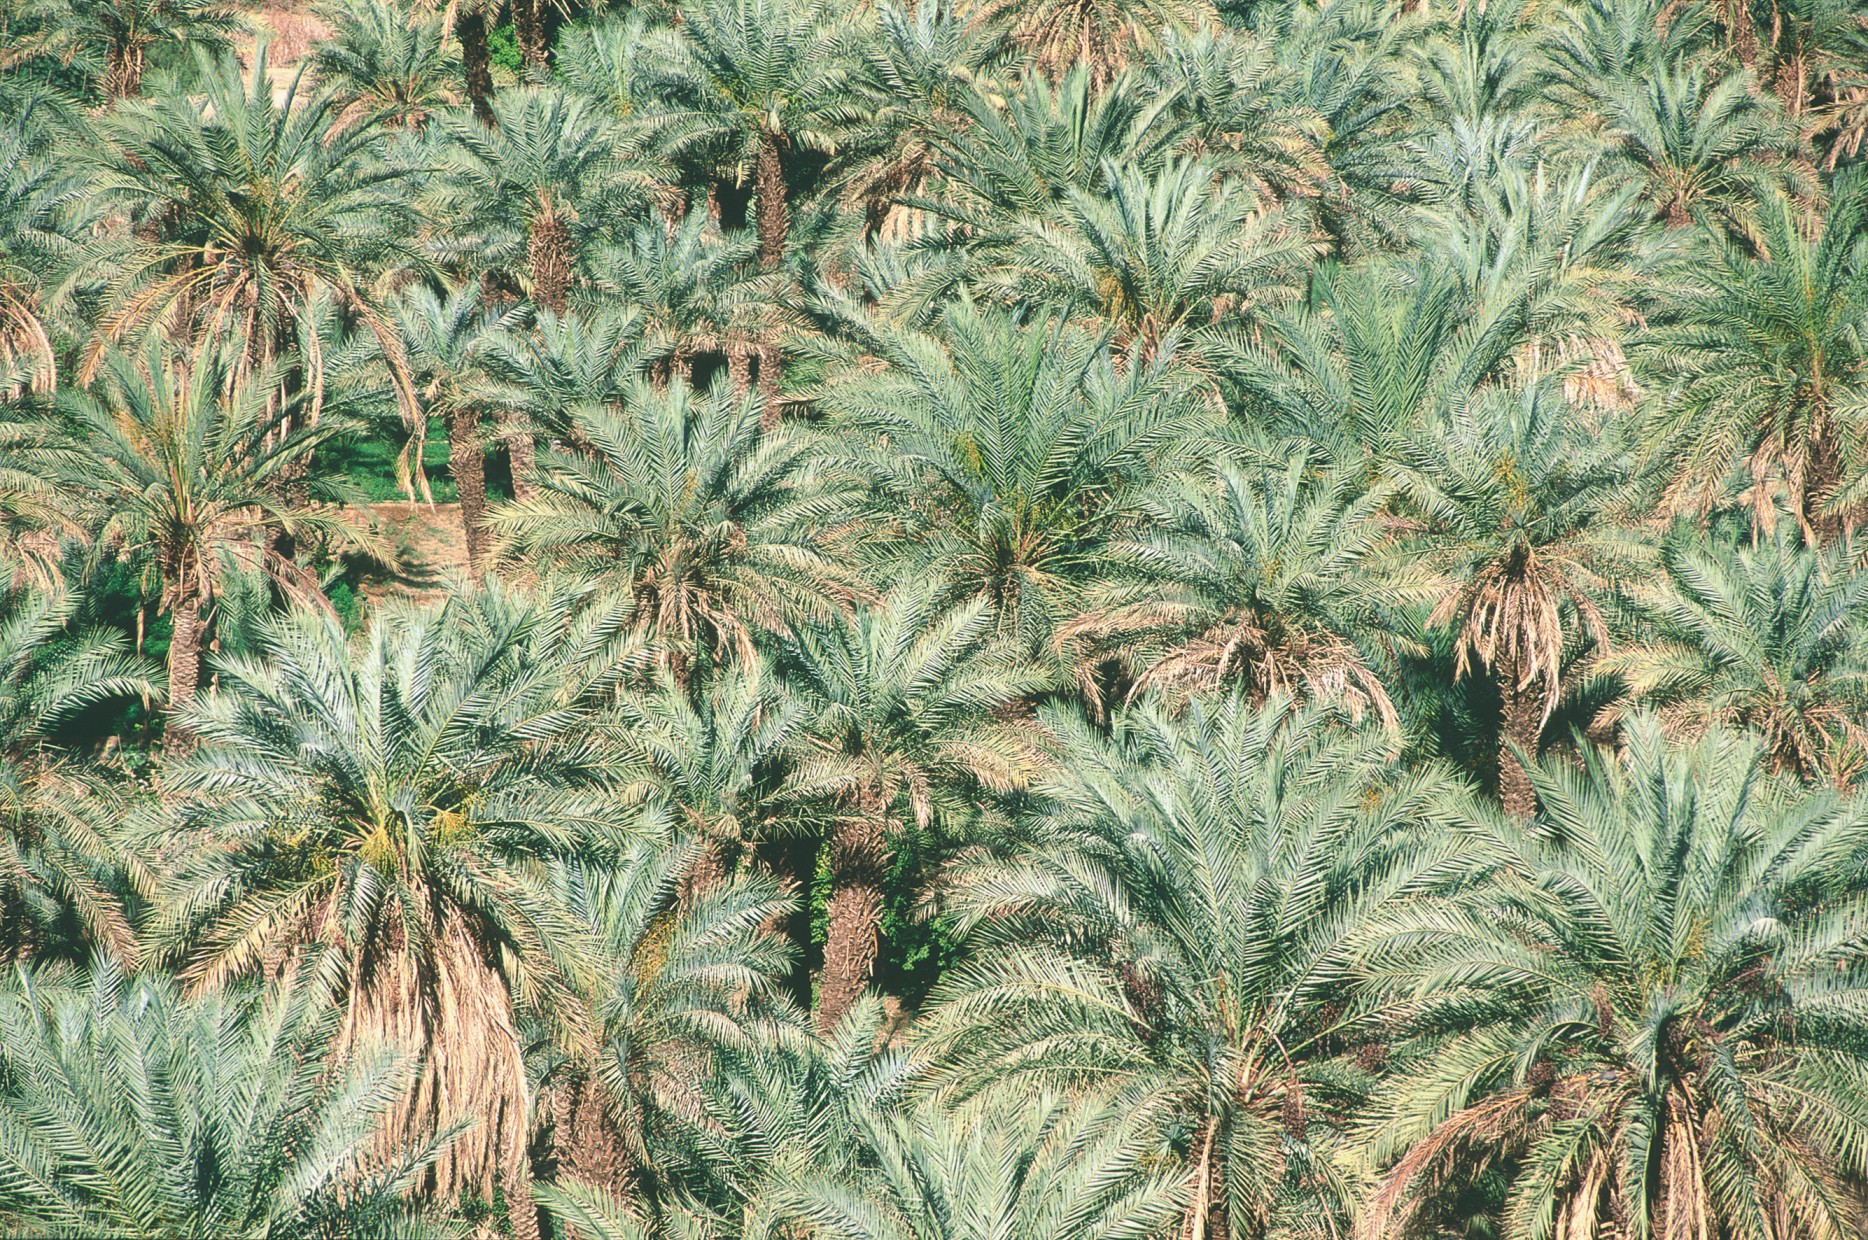 Oasis de Djanet, la palmeraie